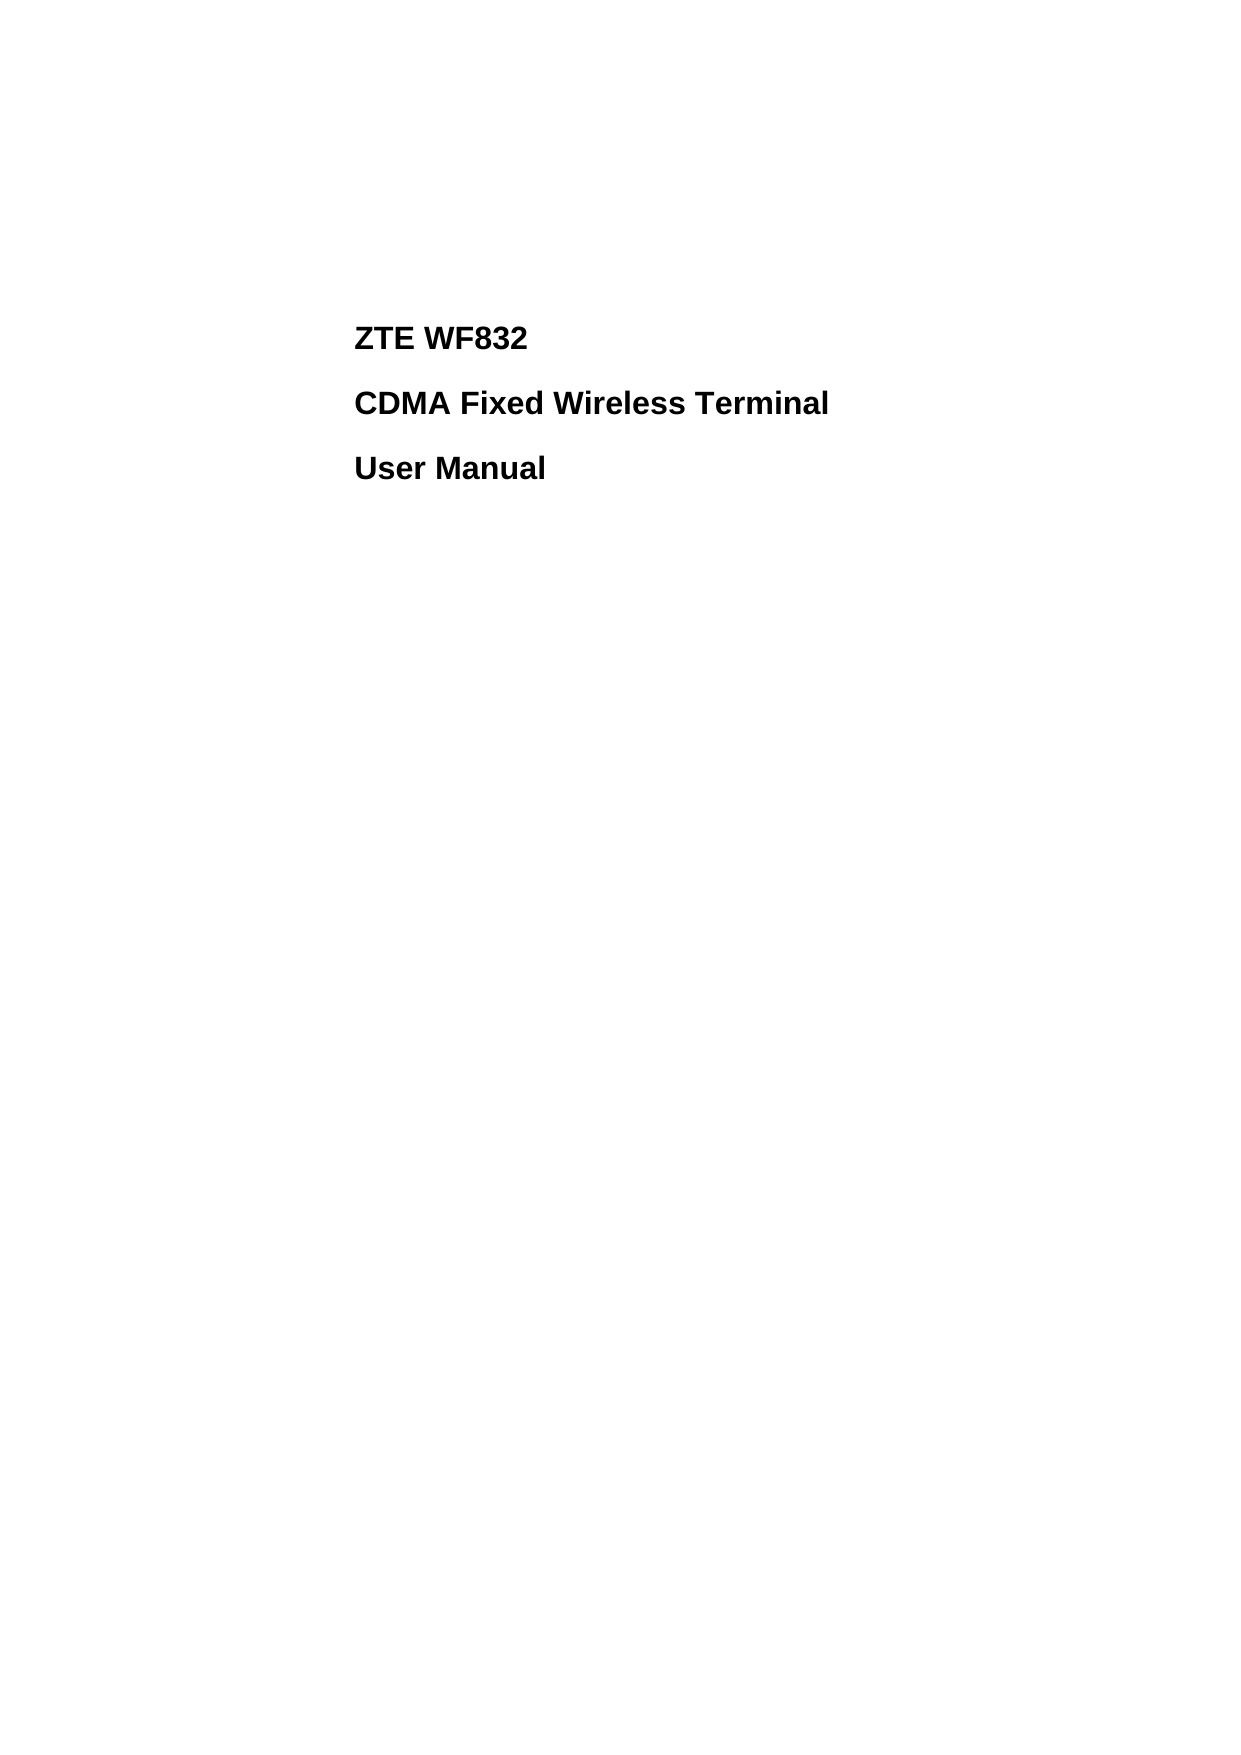     ZTE WF832 CDMA Fixed Wireless Terminal User Manual         